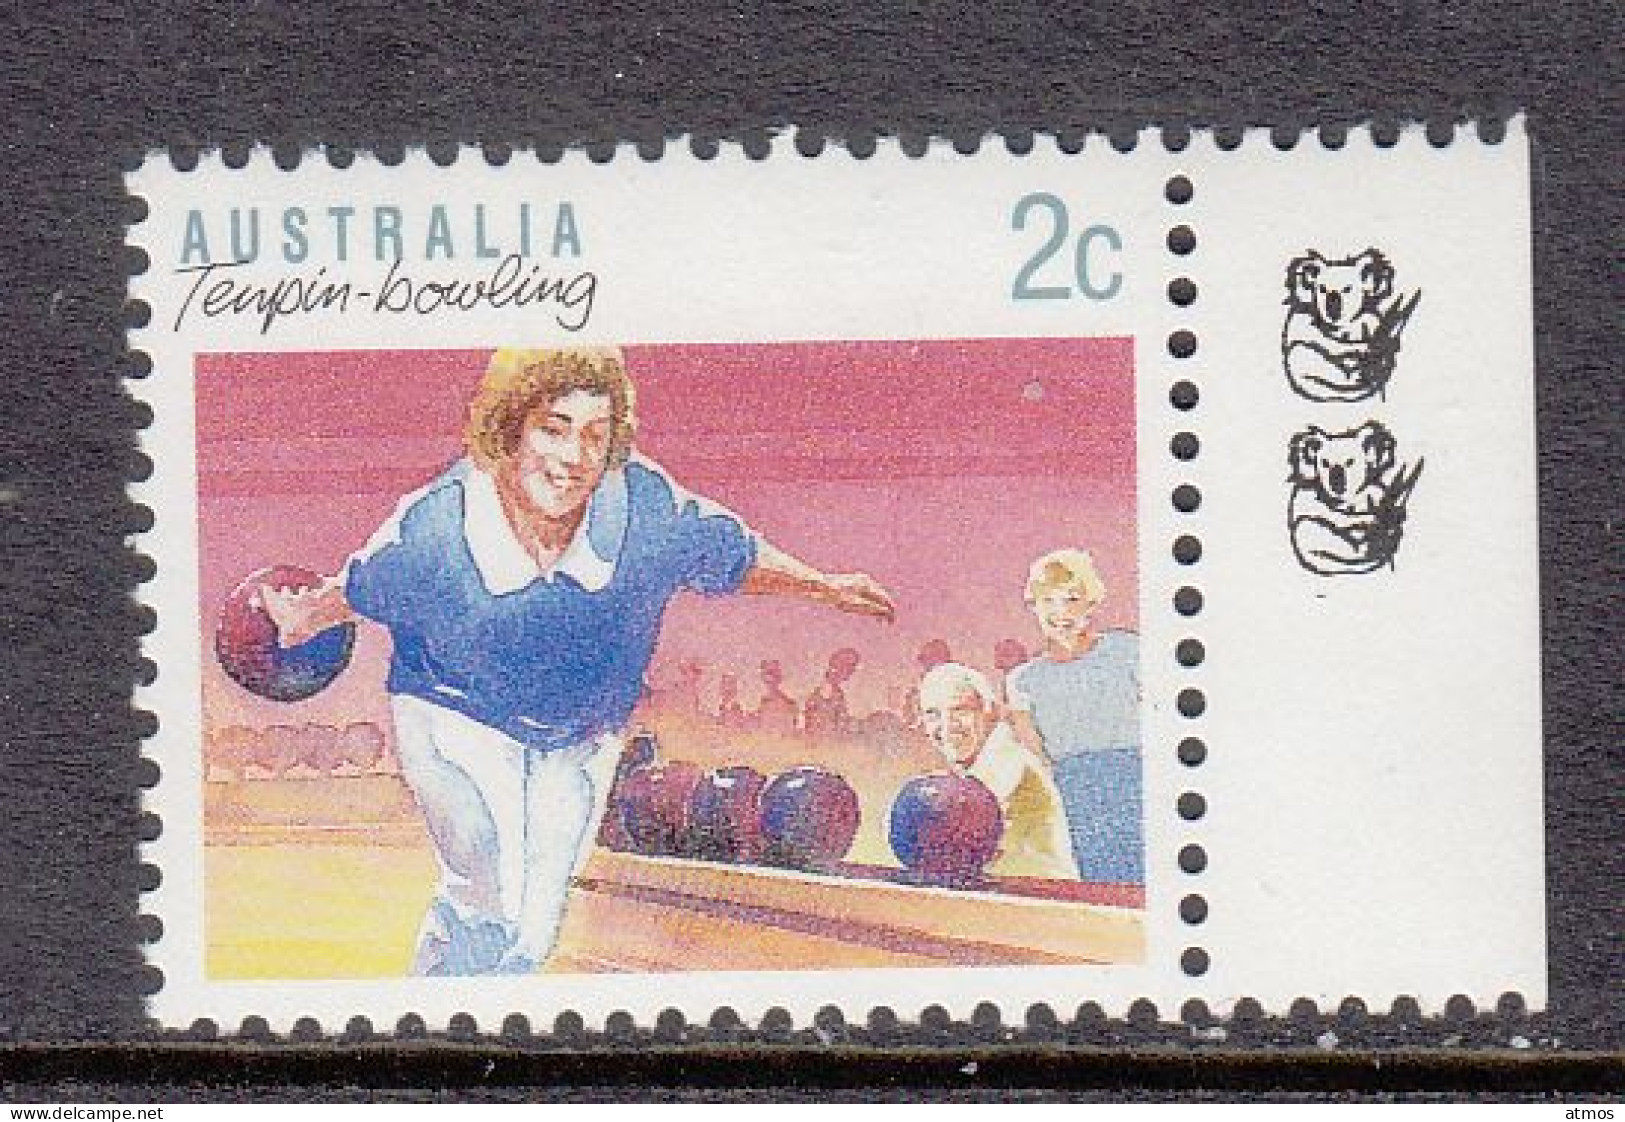 Australia MNH Michel Nr 1140 From 1989 Reprint 2 Koala - Ungebraucht